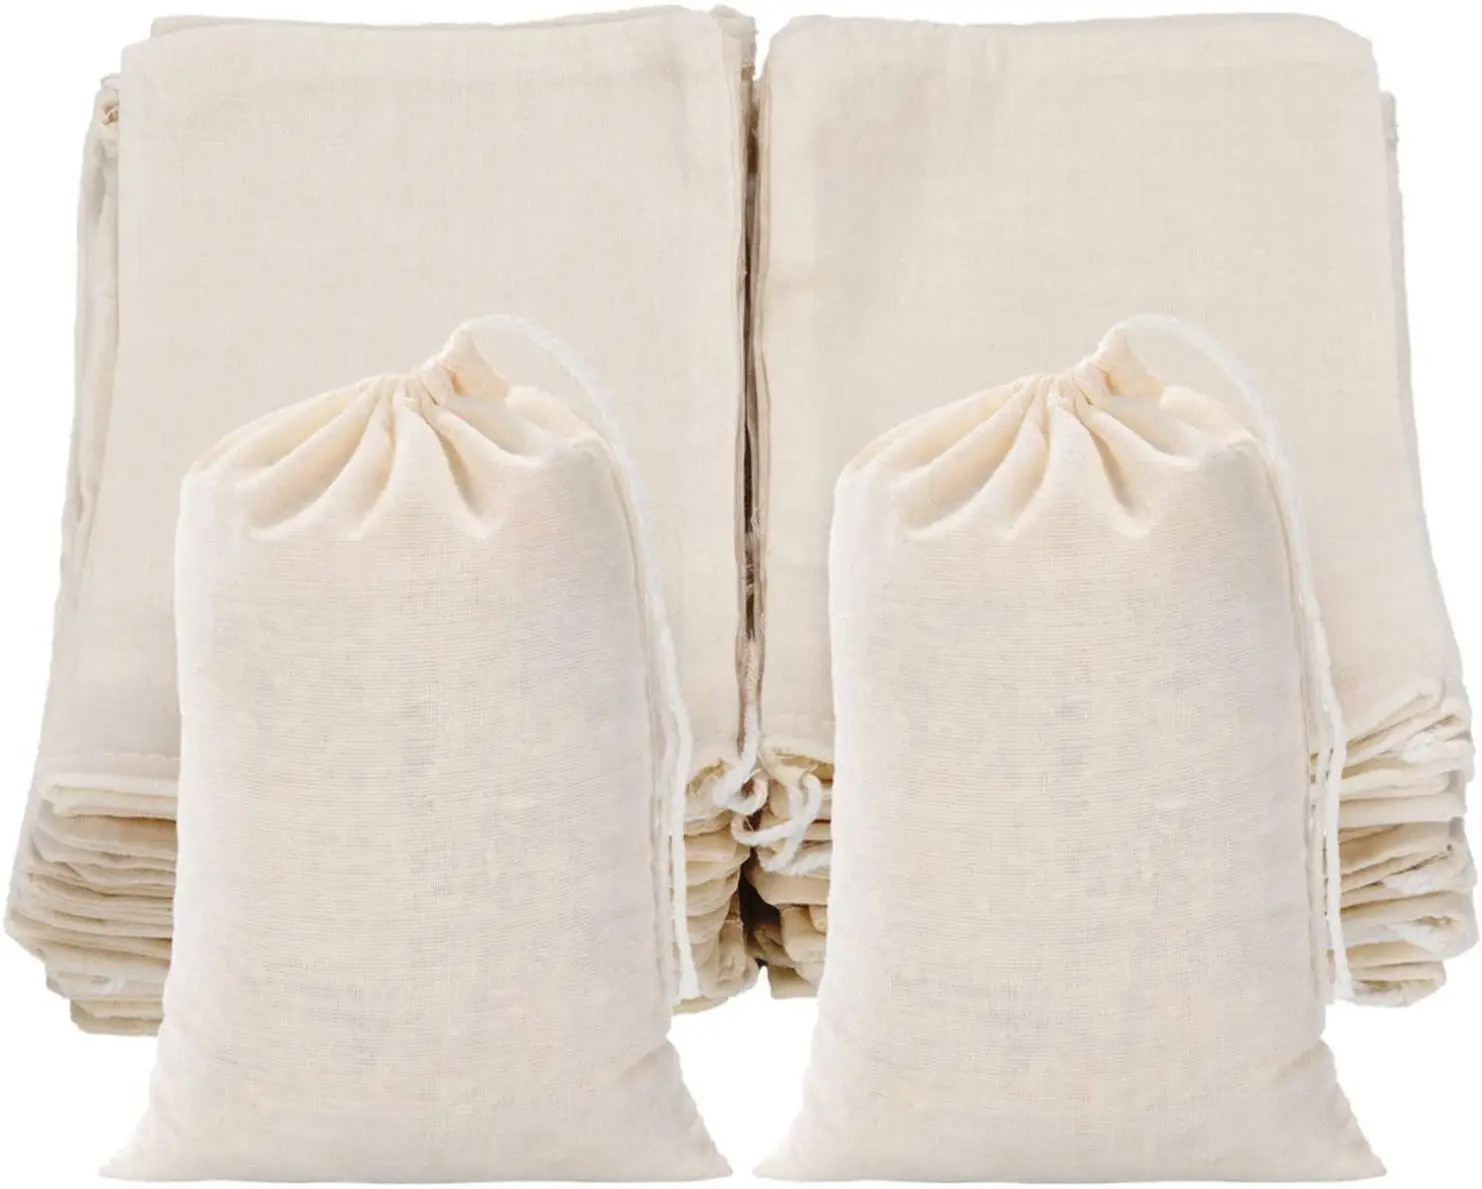 50 Pieces Cotton Drawstring Bags Muslin Bag Sachet Bag For Home Supplies Small-Medium-Large